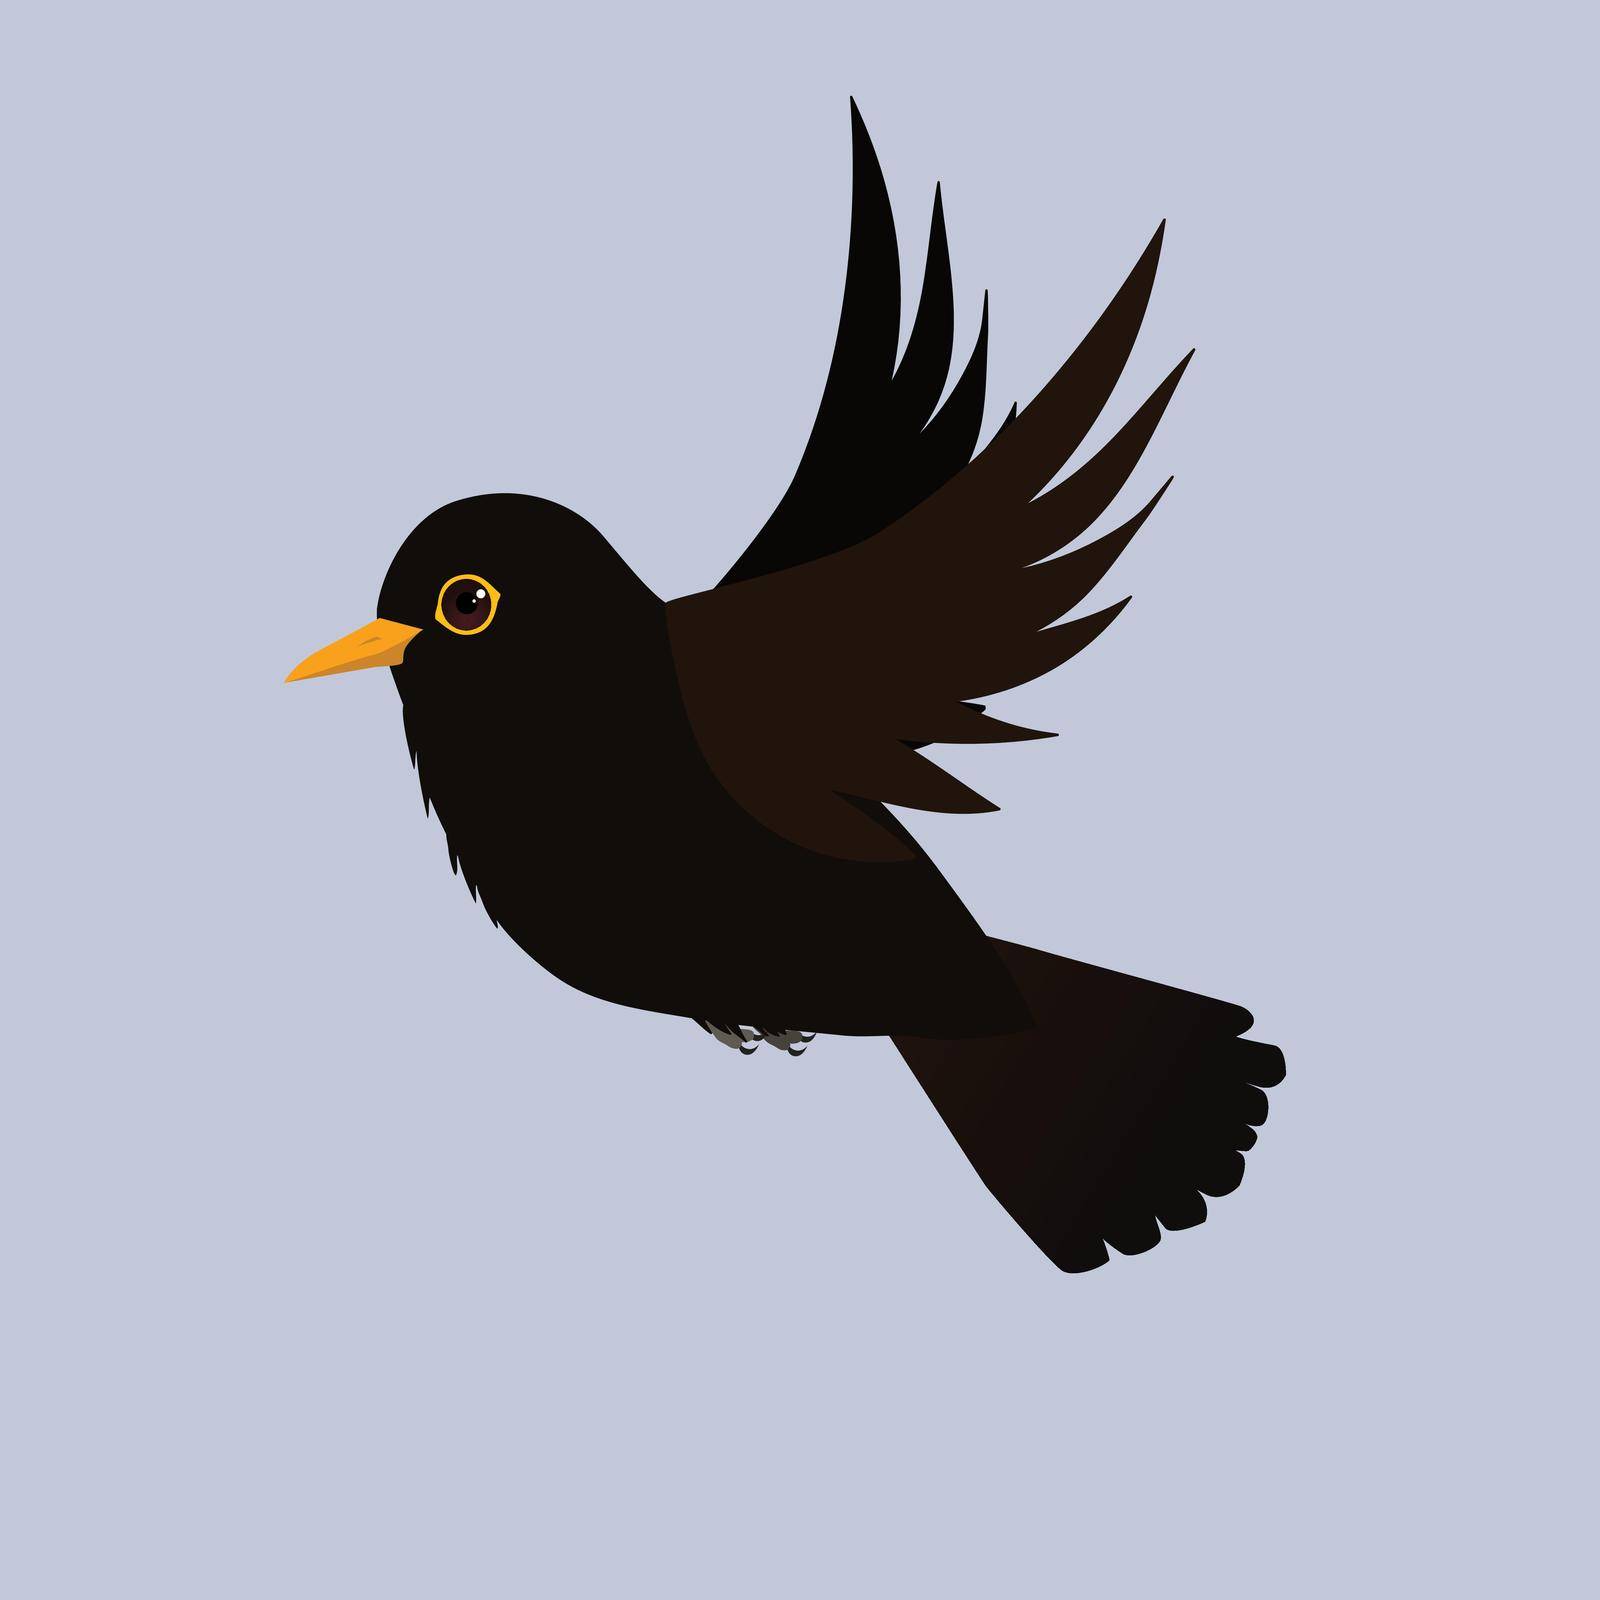 Blackbird flying. Cut out on a light blue background. It is a male bird.